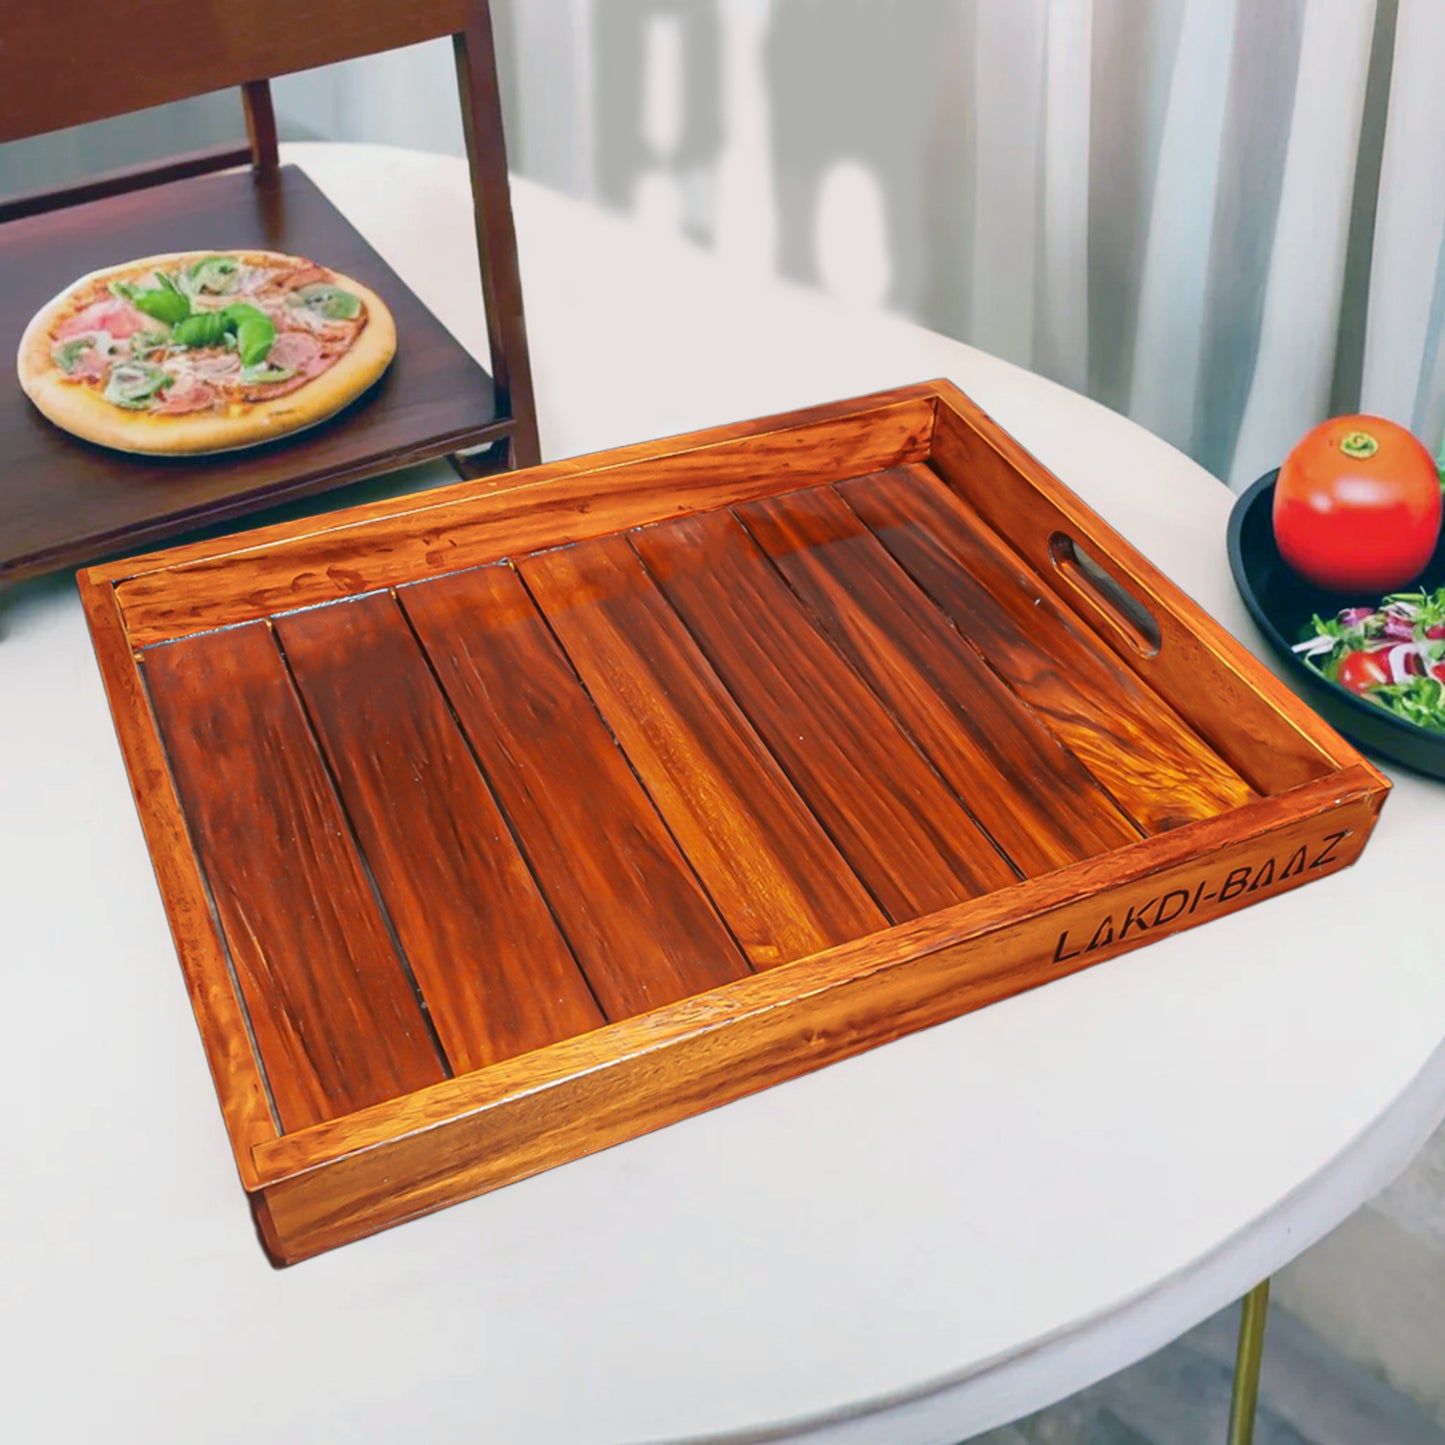 Buy Lakdi-Baaz| Premium Wooden Serving Tray Large Teak(16 X 12 Inch)